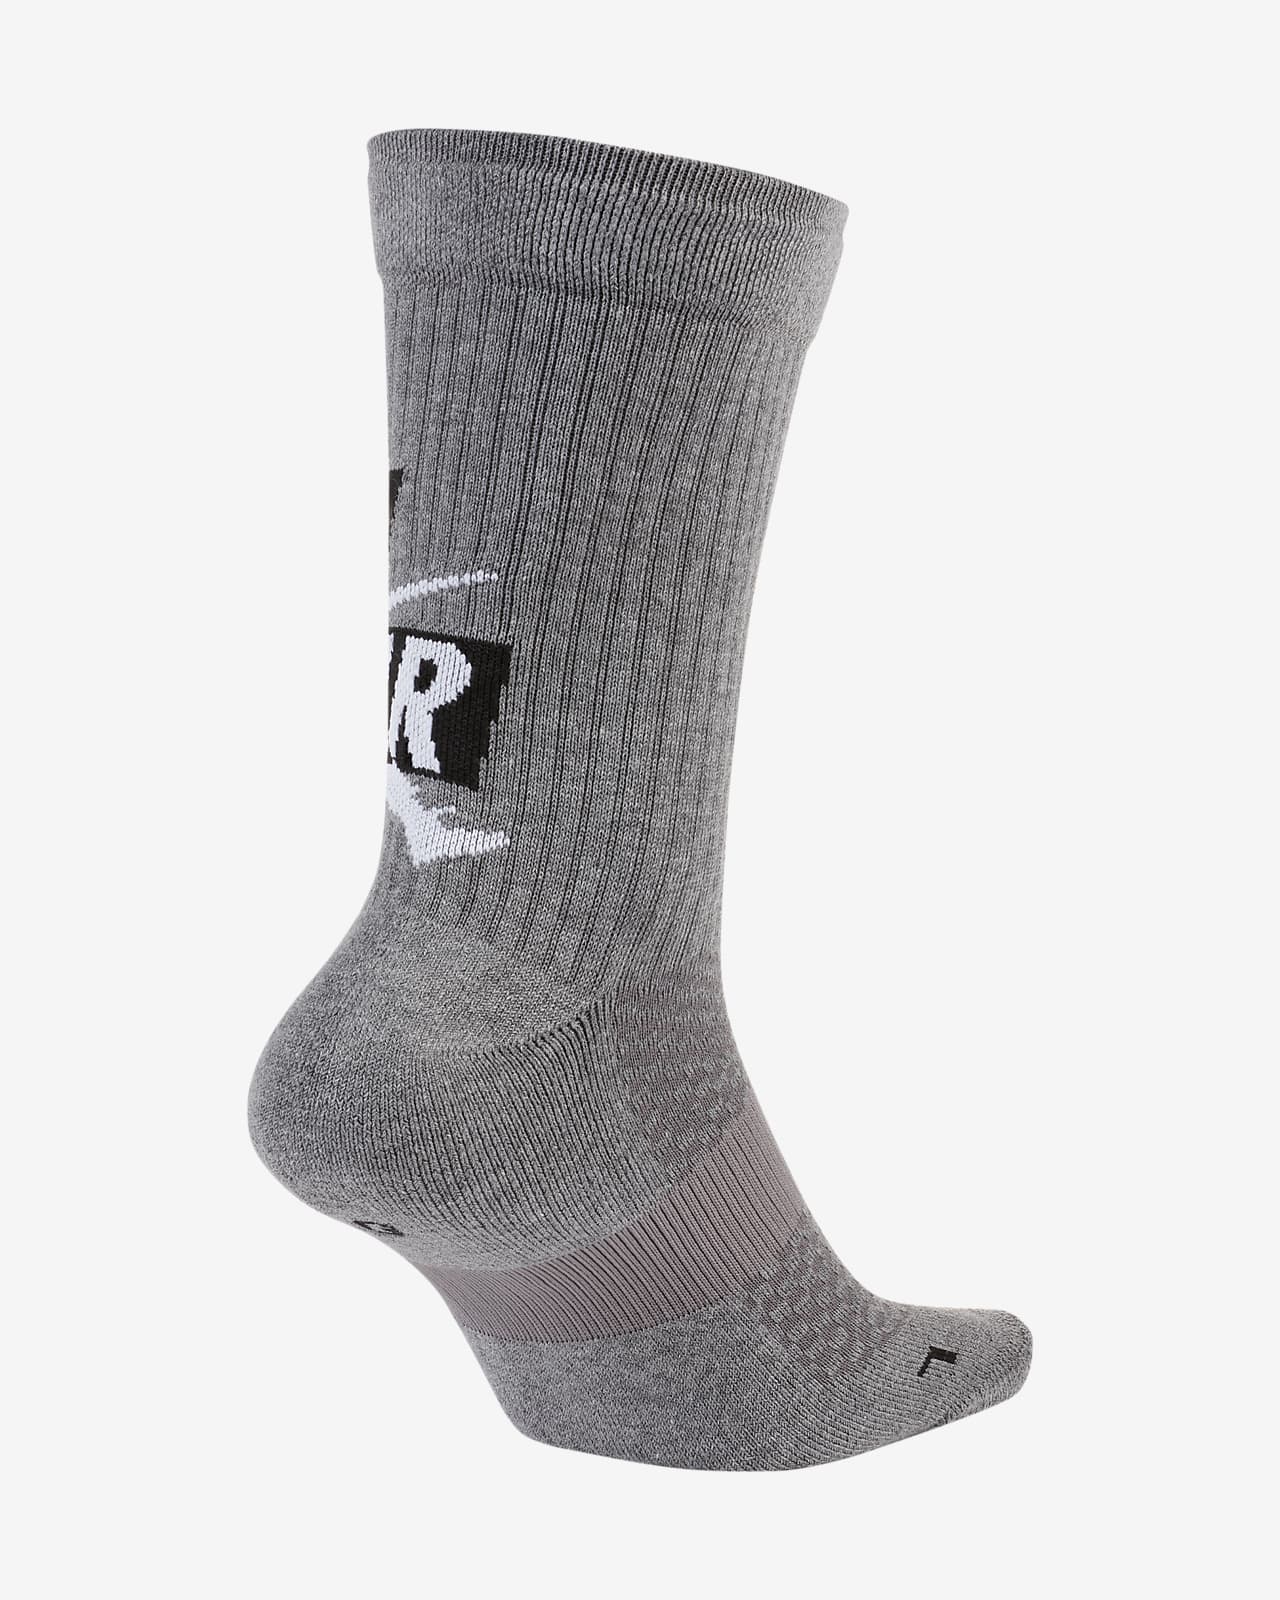 grey jordan socks